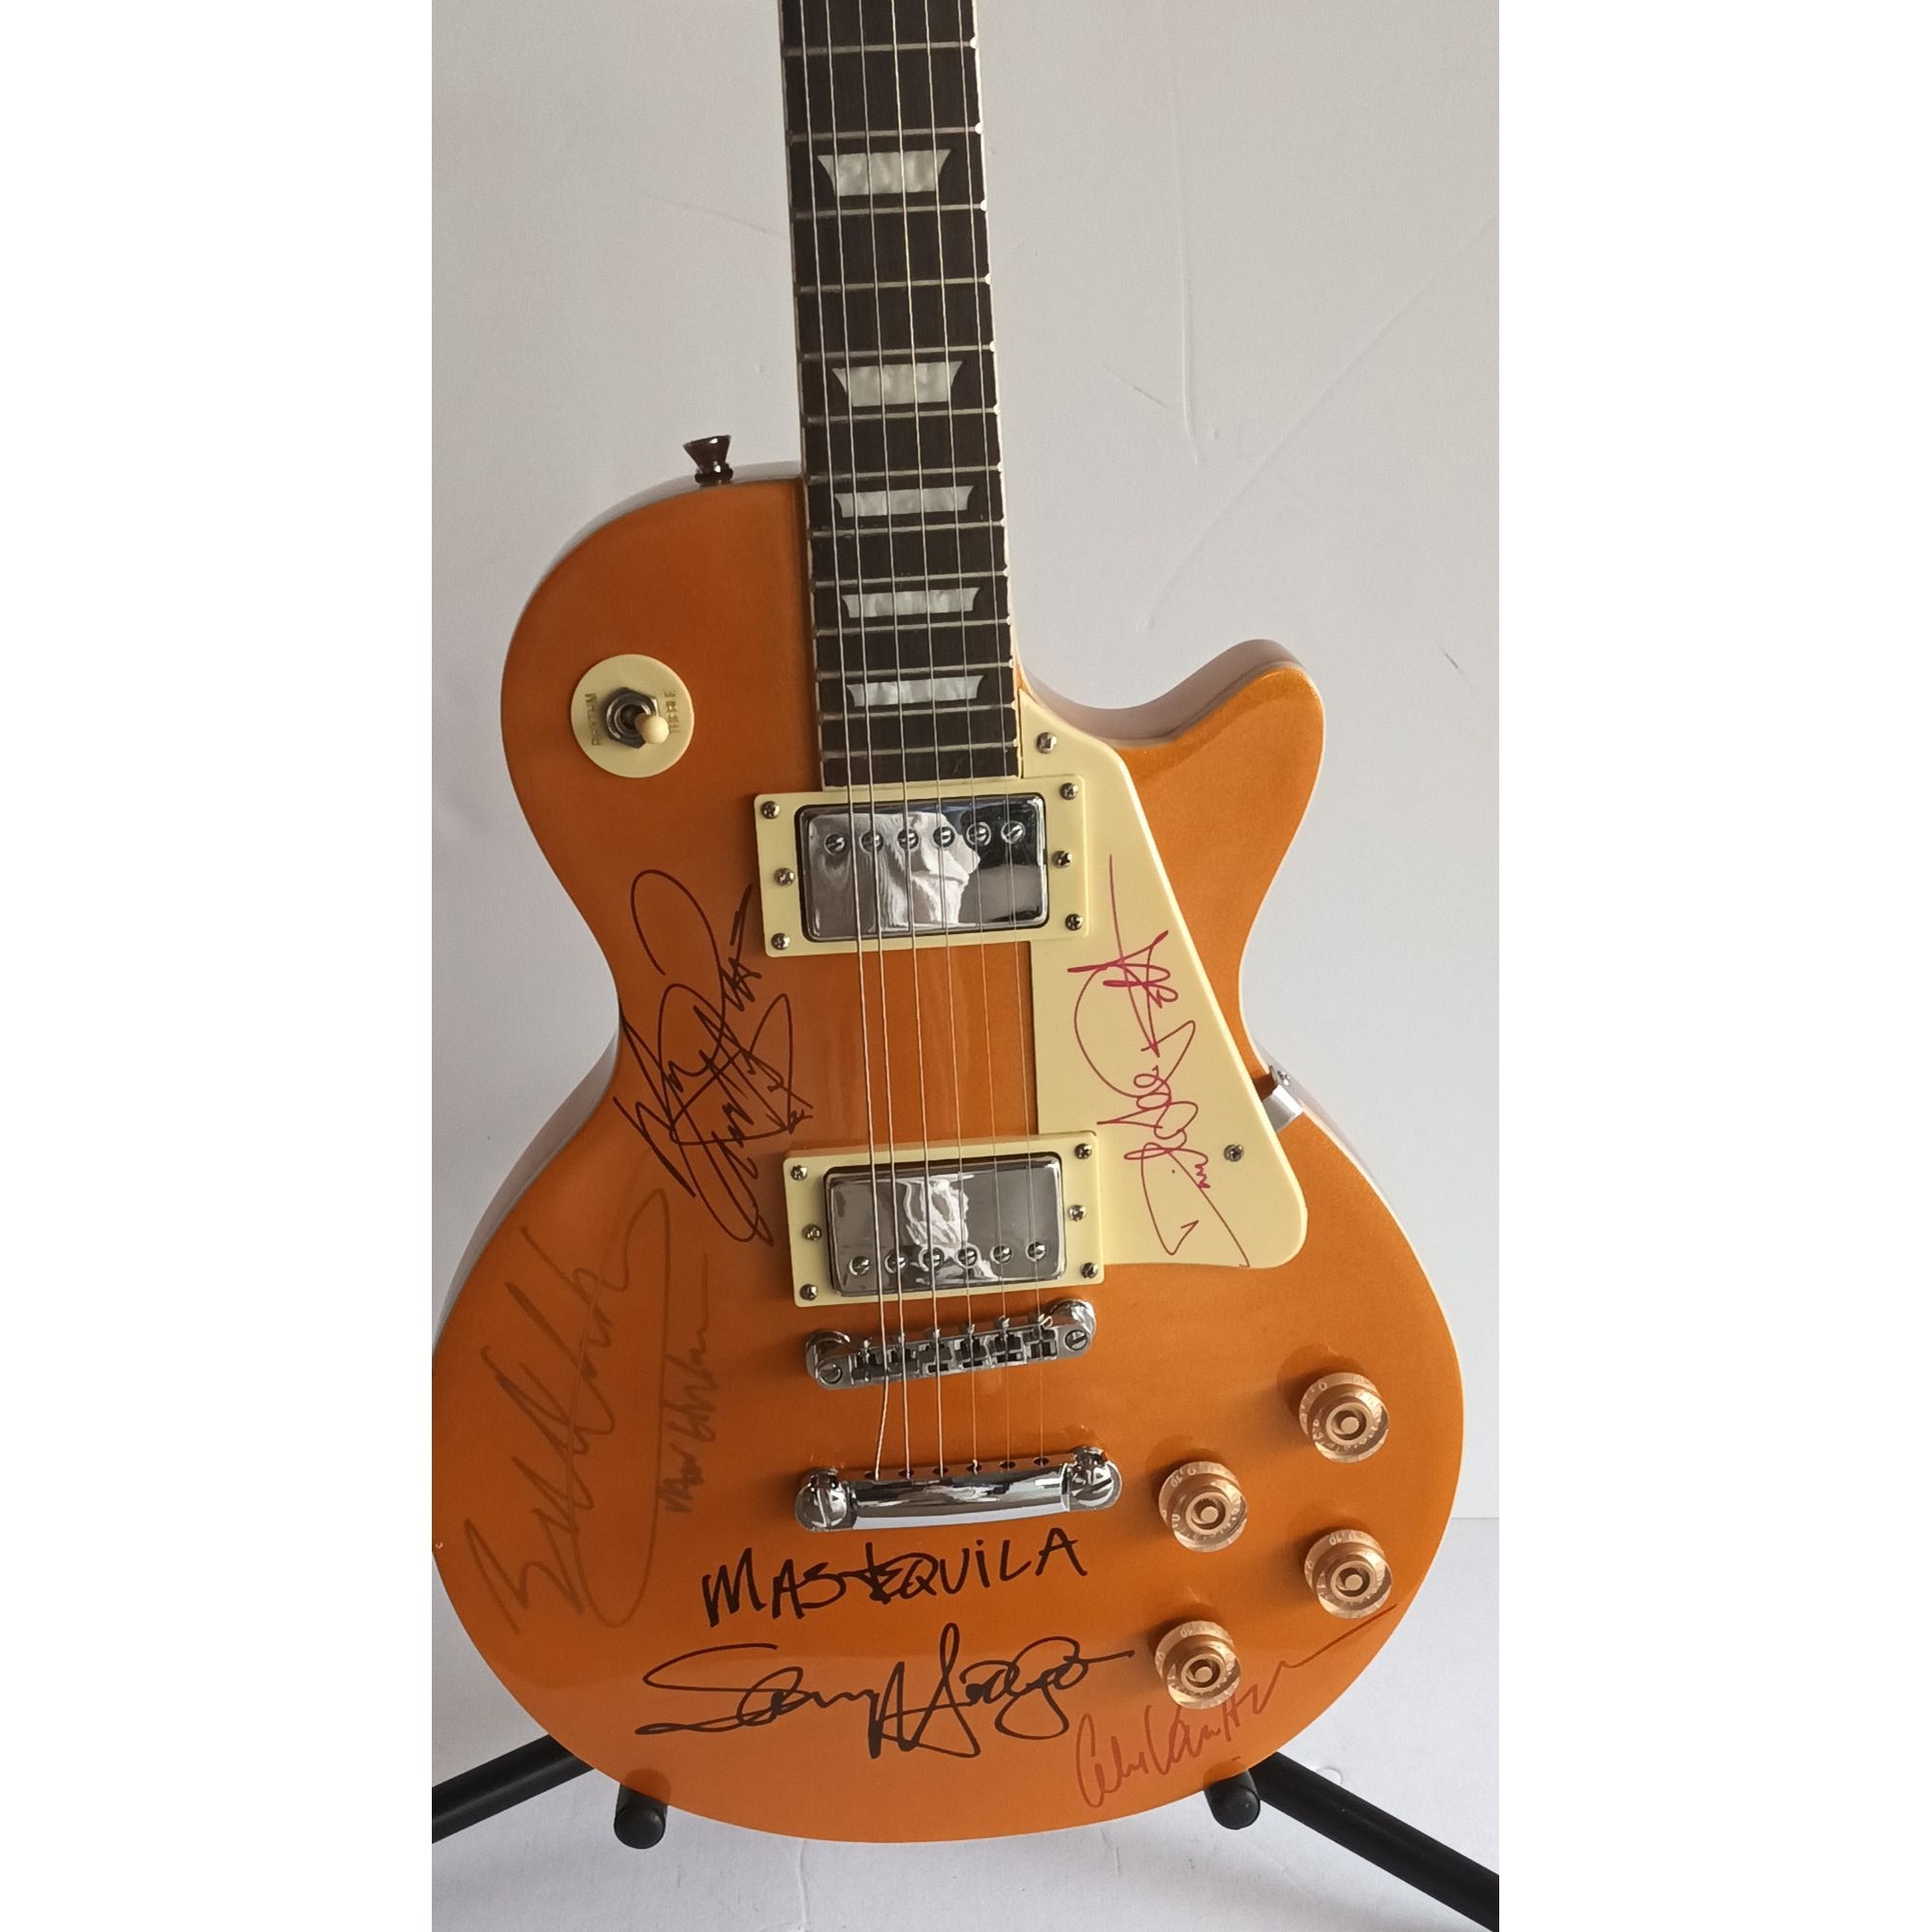 Eddie Van Halen David Lee Roth Sammy Hagar Gibson Les Paul Van Halen signed guitar with proof